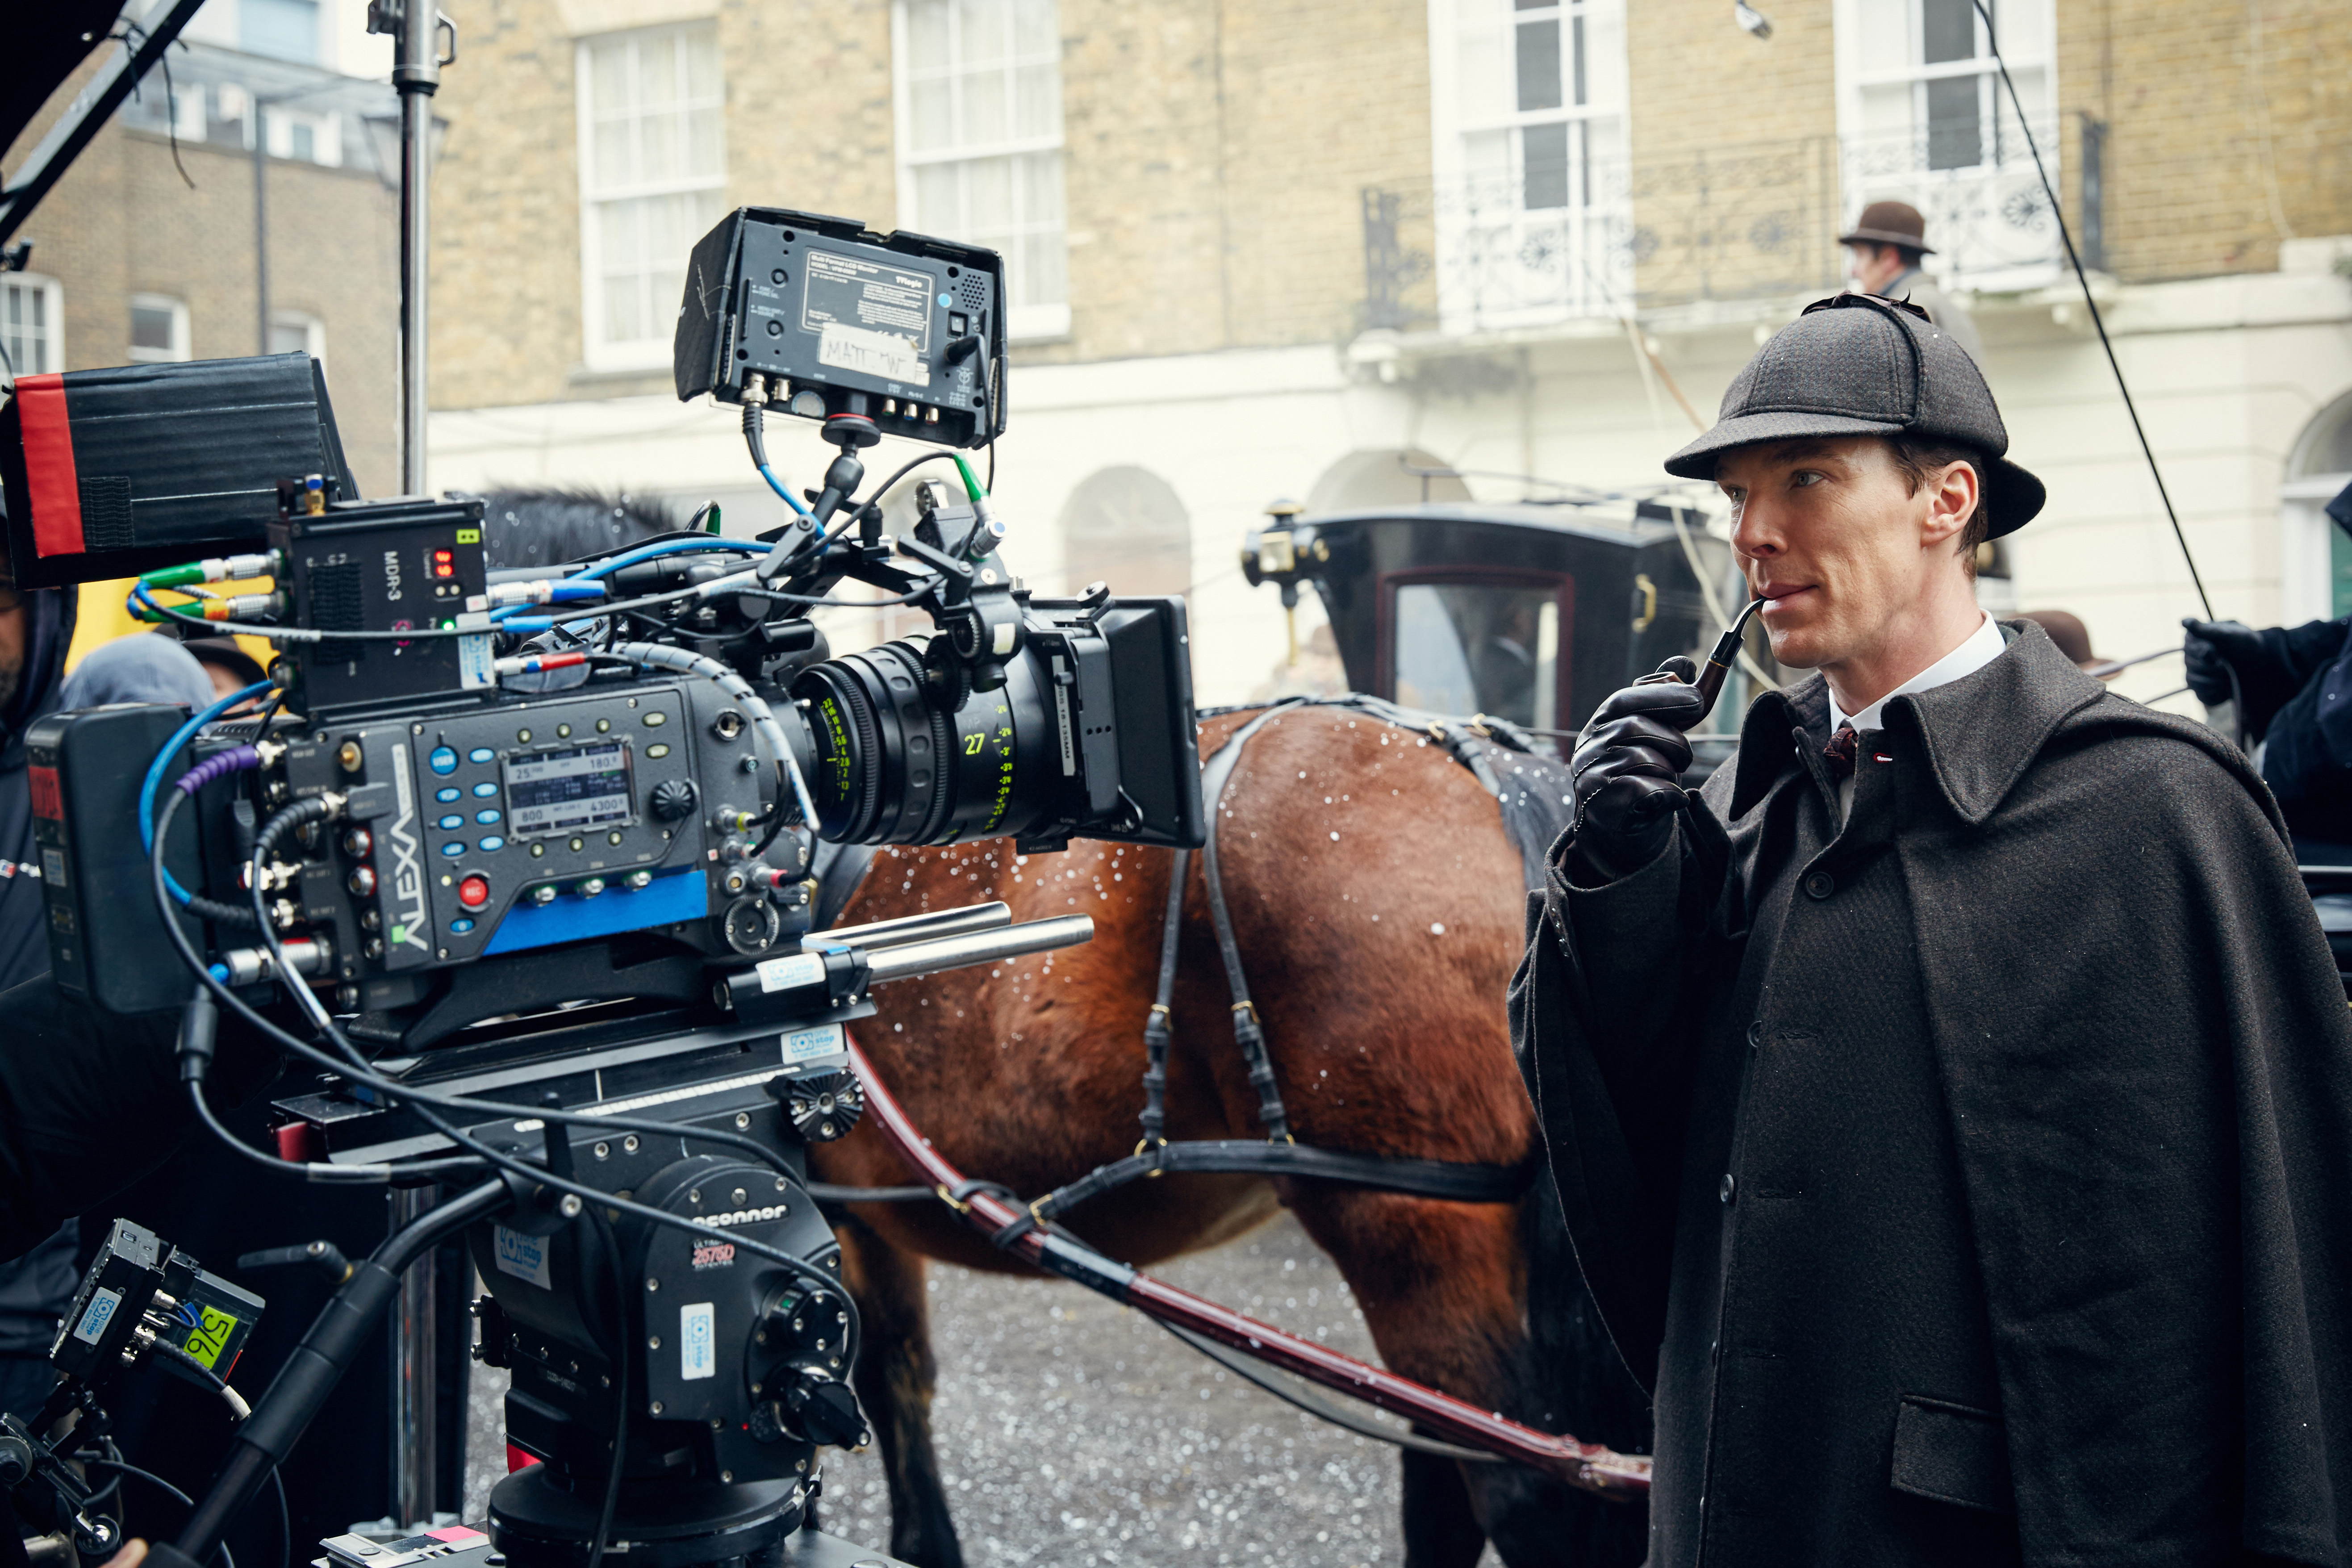 Trailer for 'Sherlock' Christmas Special